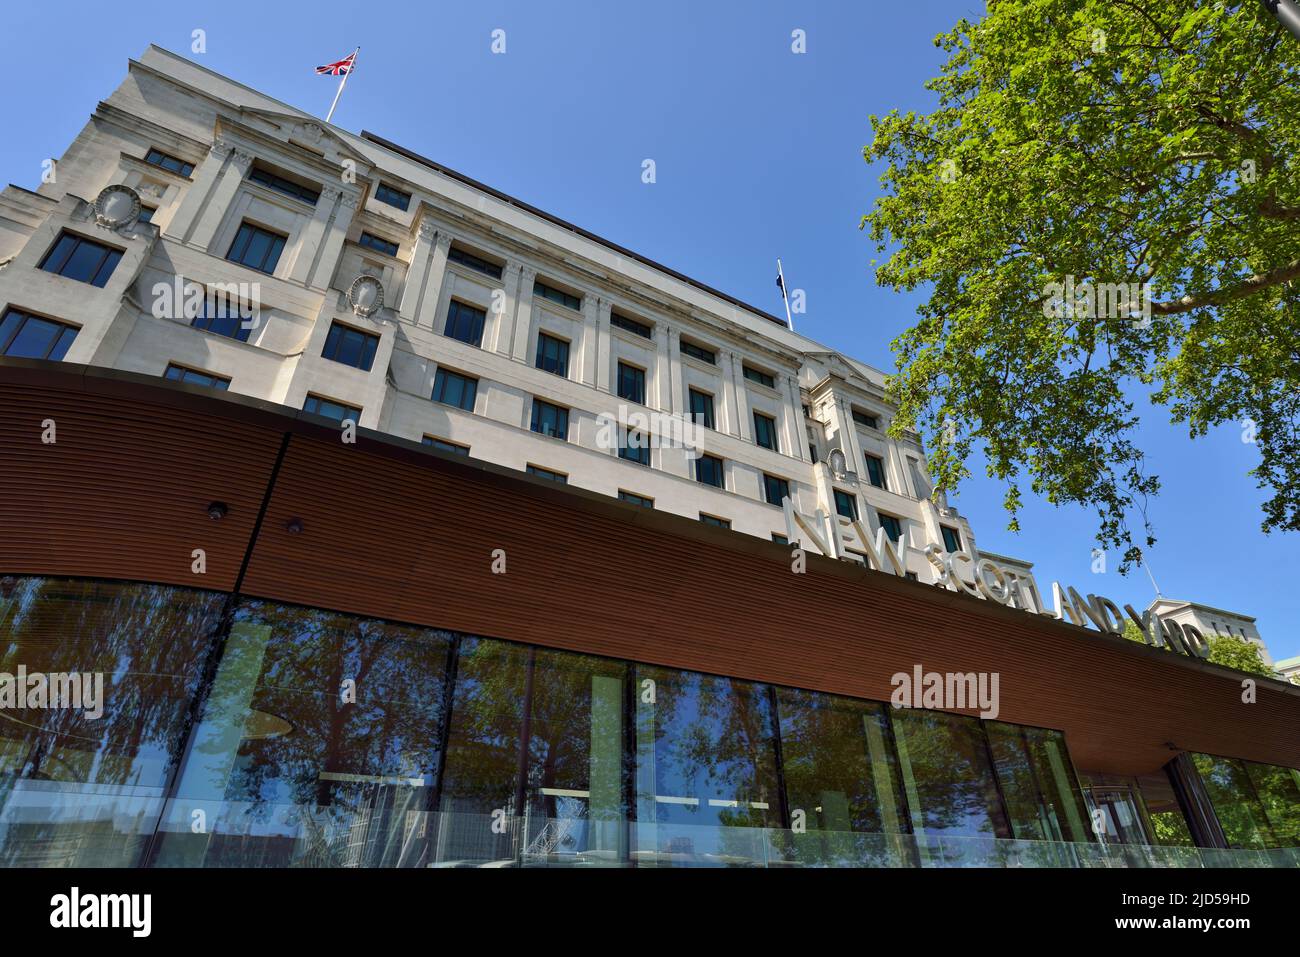 New Scotland Yard, Metropolitan Police Headquarters, Victoria Embankment, Westminster, London. United Kingdom Stock Photo